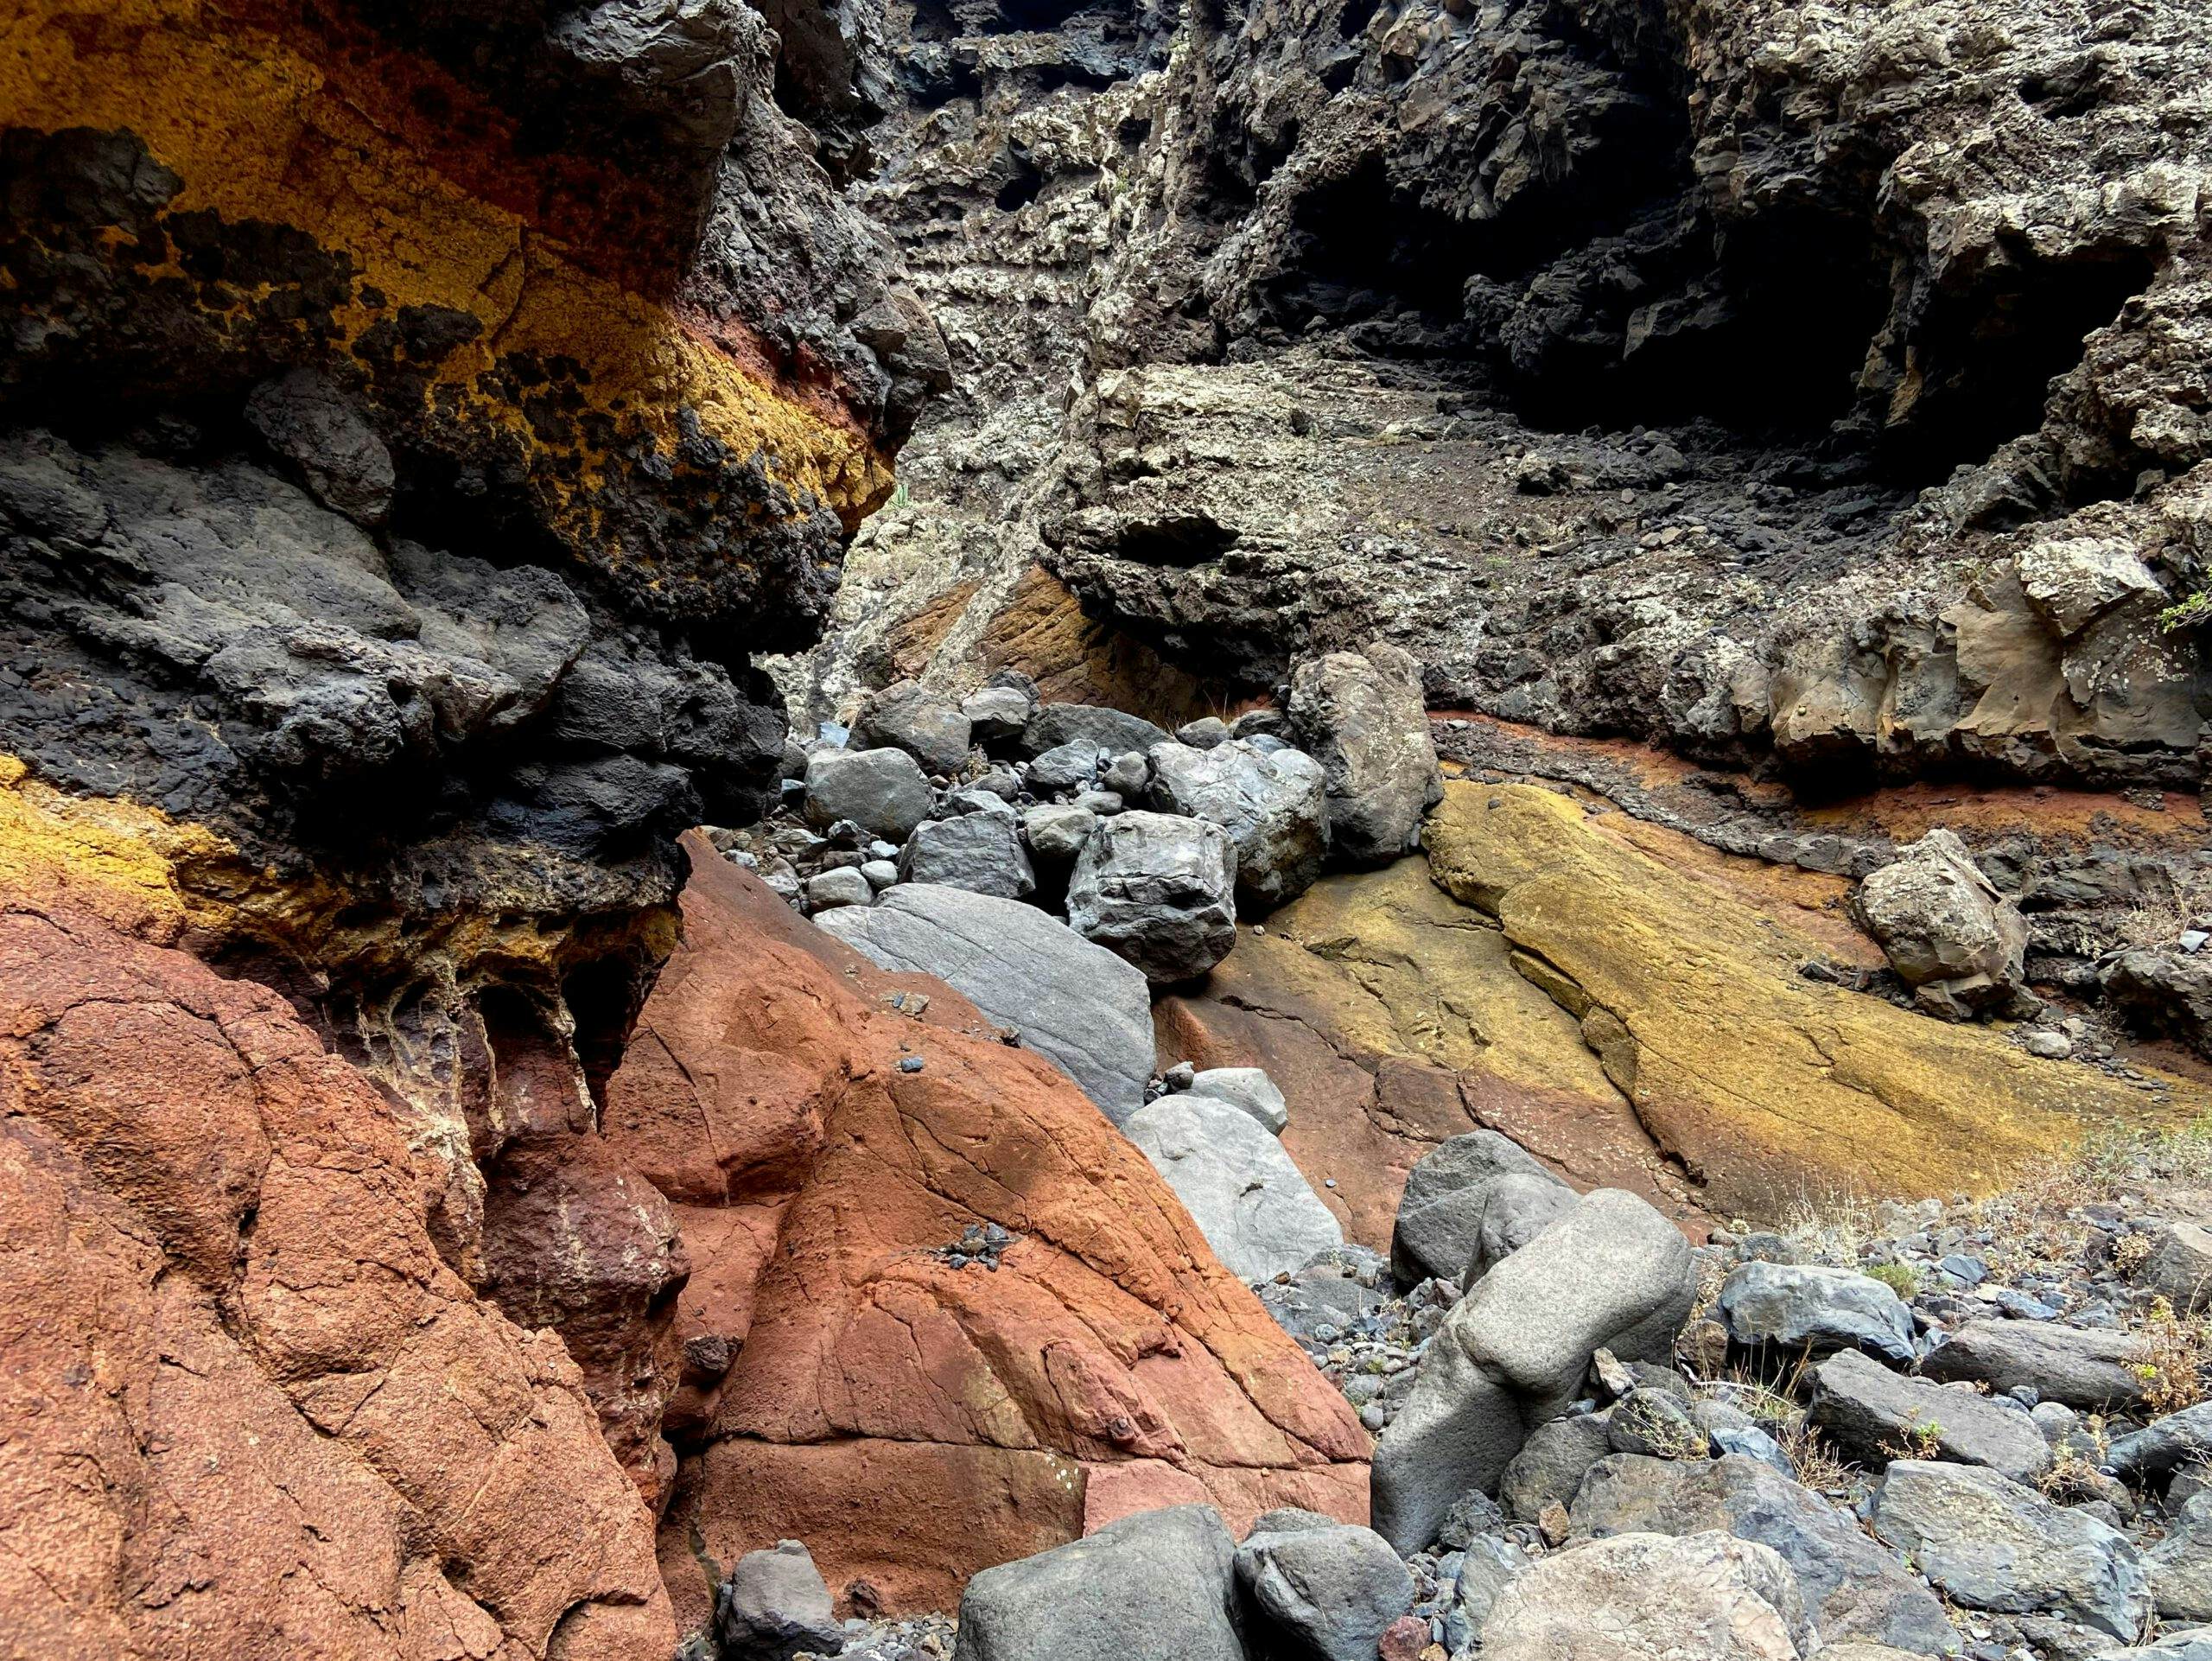 Colourful rocks, where the Barranco Juan López and the Barranco Retamar meet